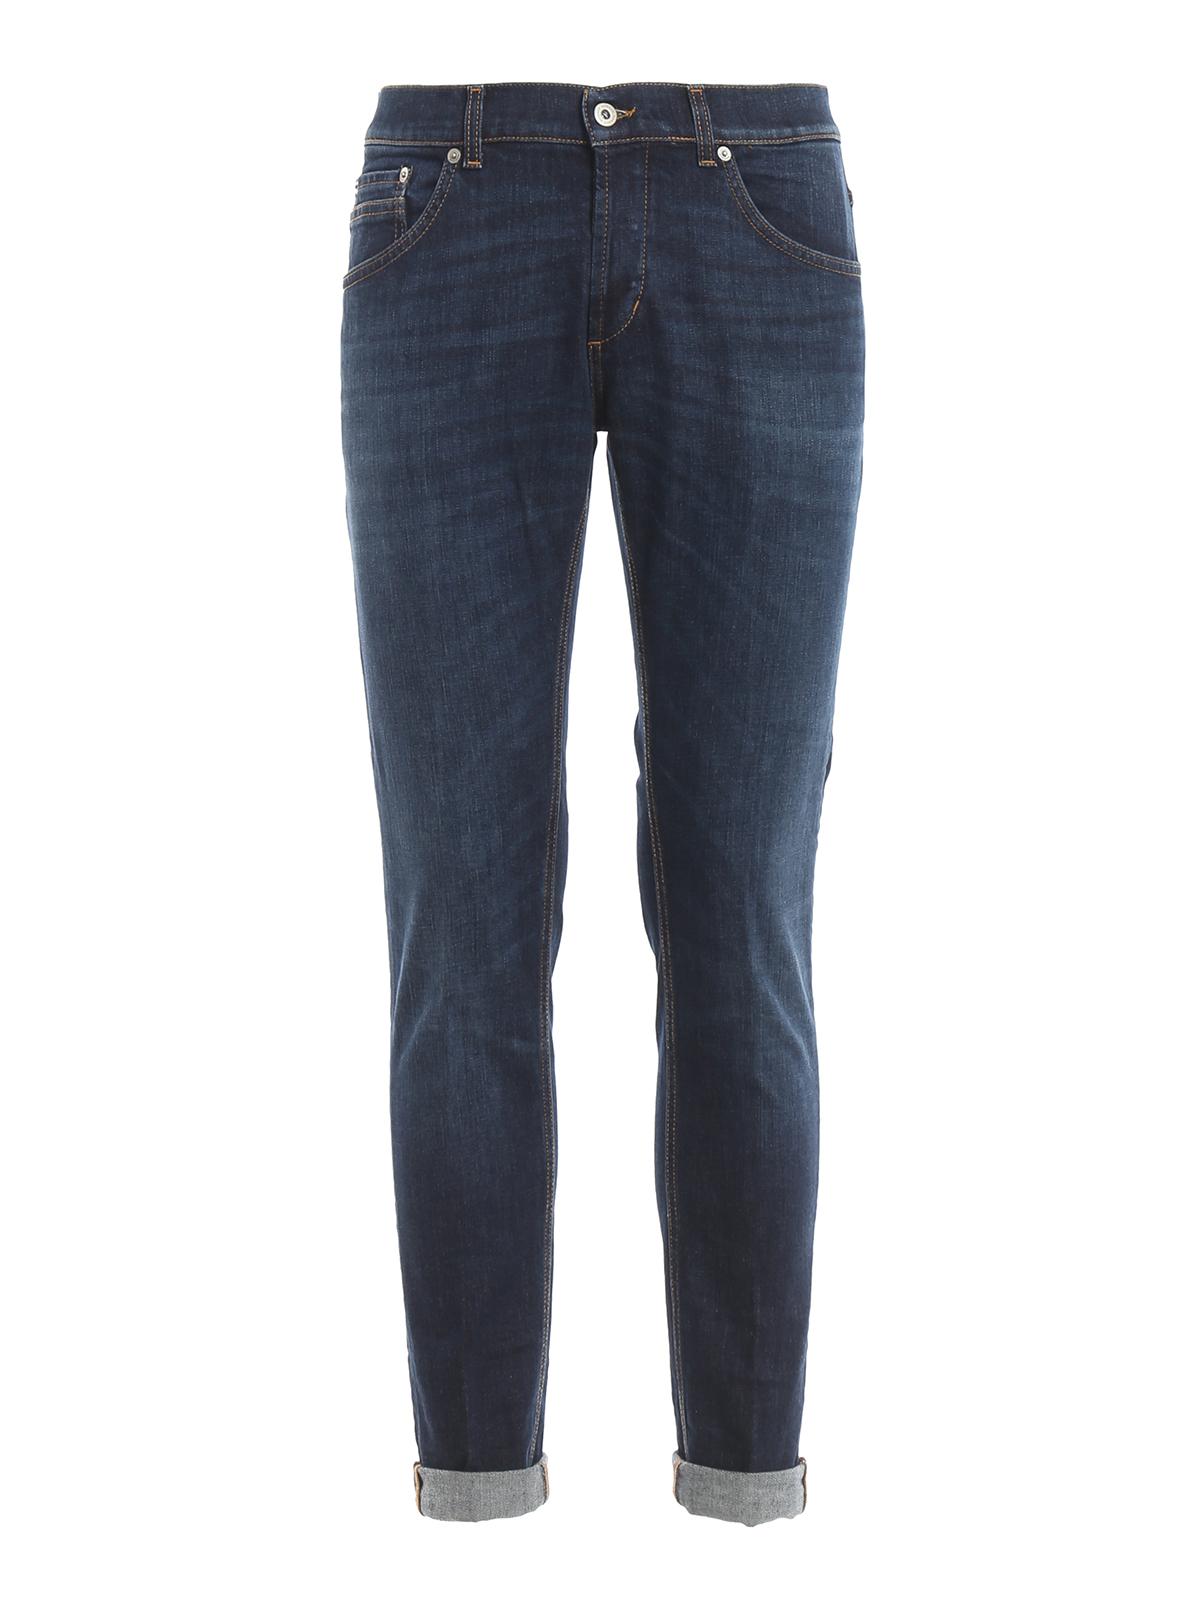 Dondup Denim Ritchie Skinny Jeans in Dark Wash (Blue) for Men - Lyst